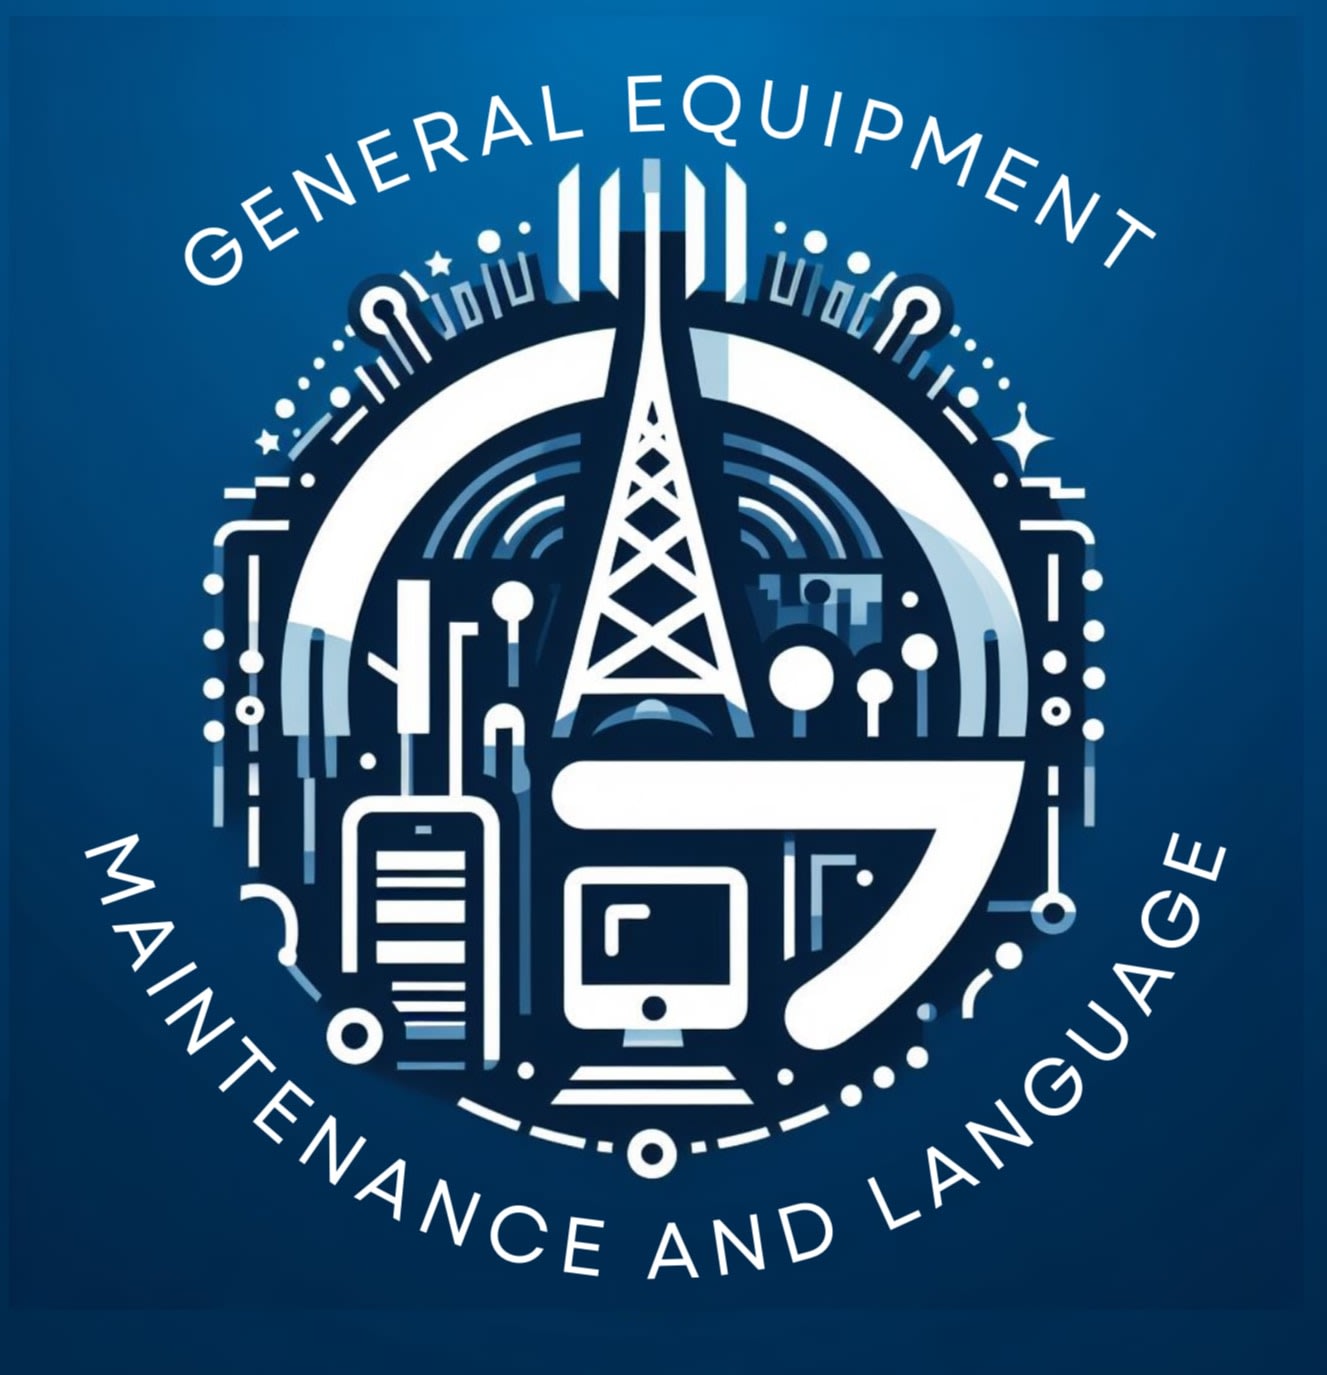 General Equipment Maintenance and Language, LLC